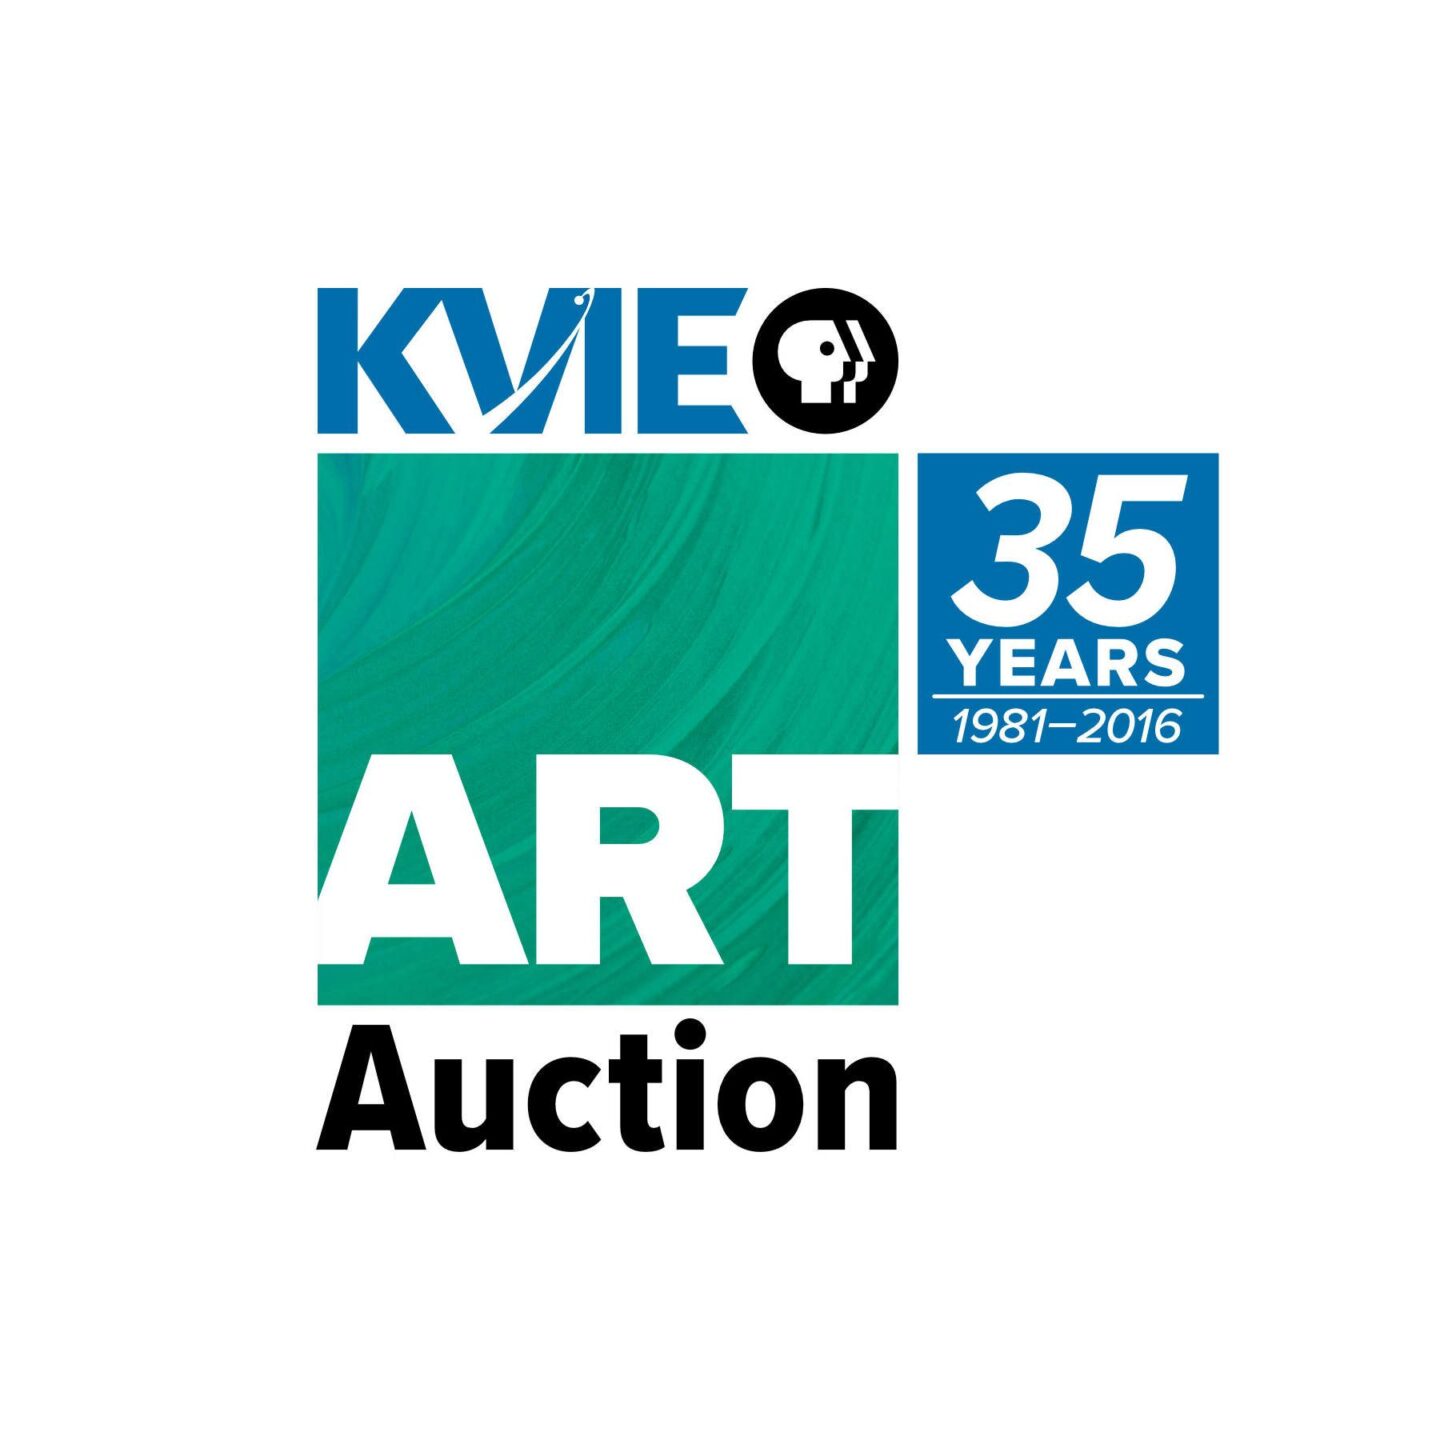 KVIE Art Auction 35 Years Logo Trim